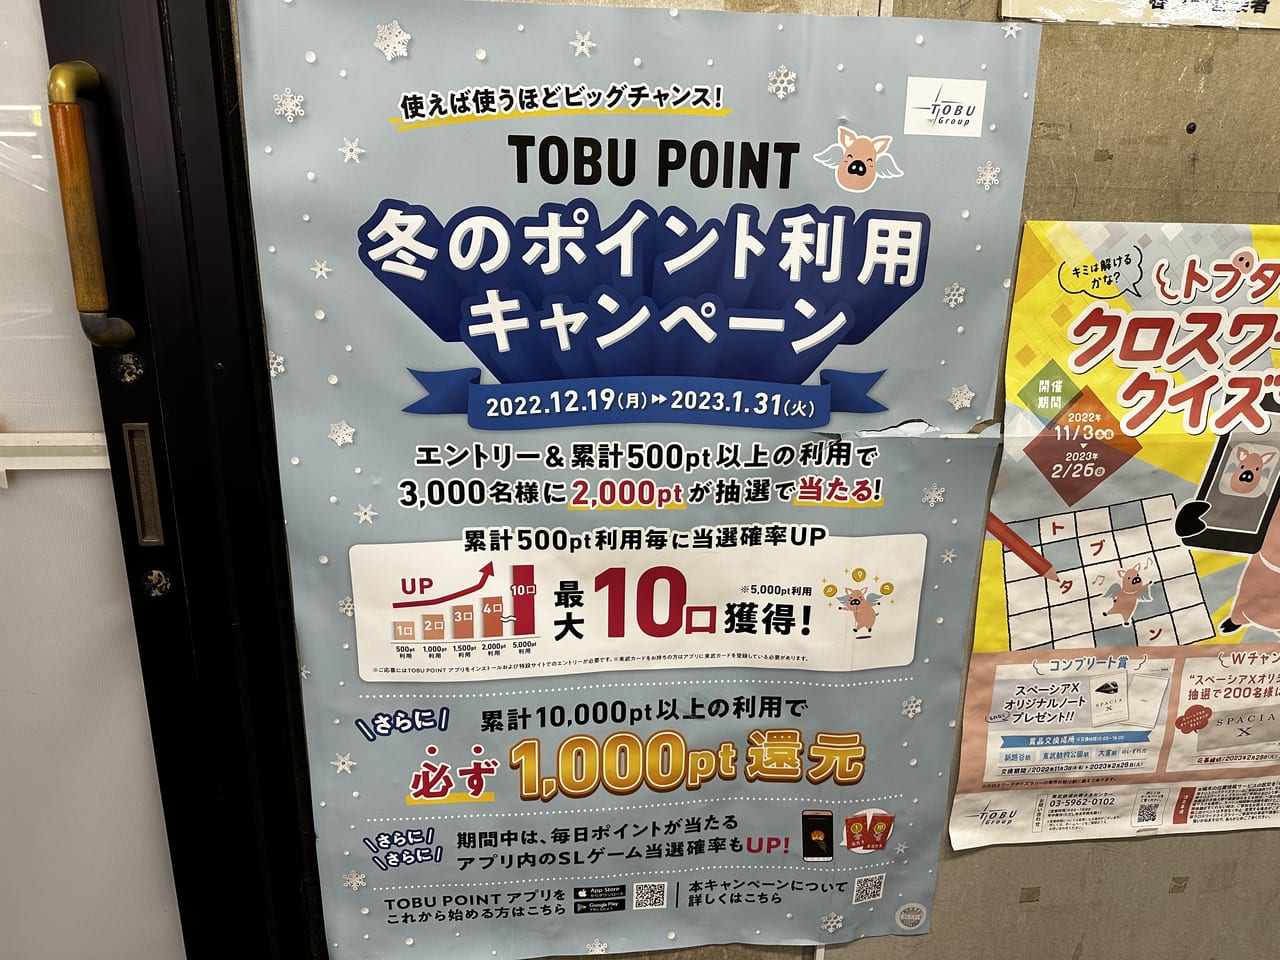 TOBU POINT 冬のポイント利用キャンペーン